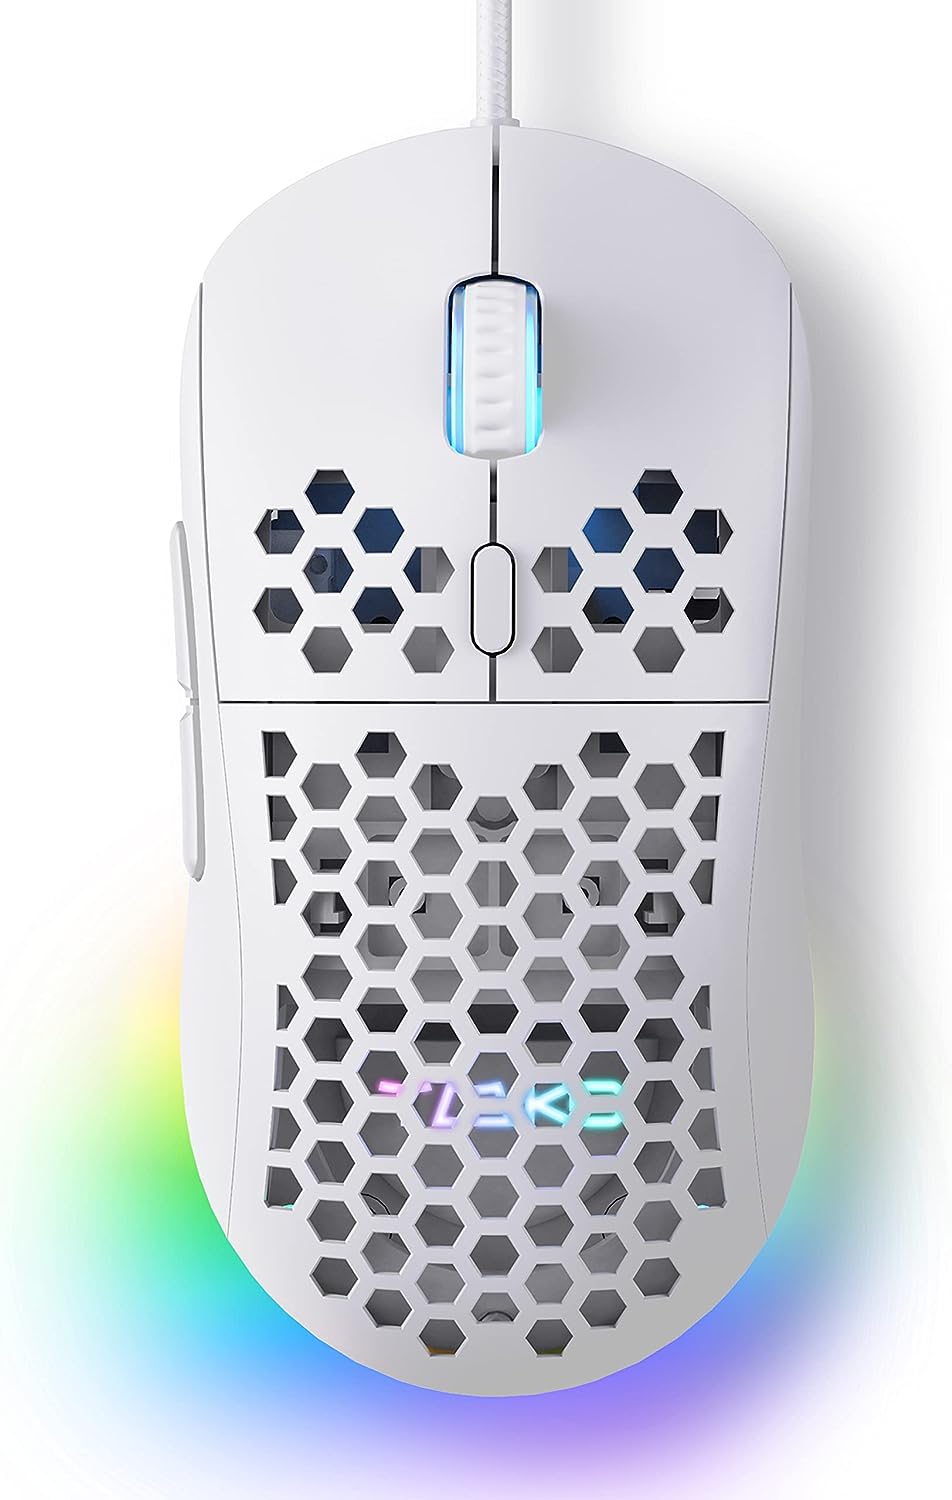 TMKB Falcon M1SE Ultralight Gaming Mouse